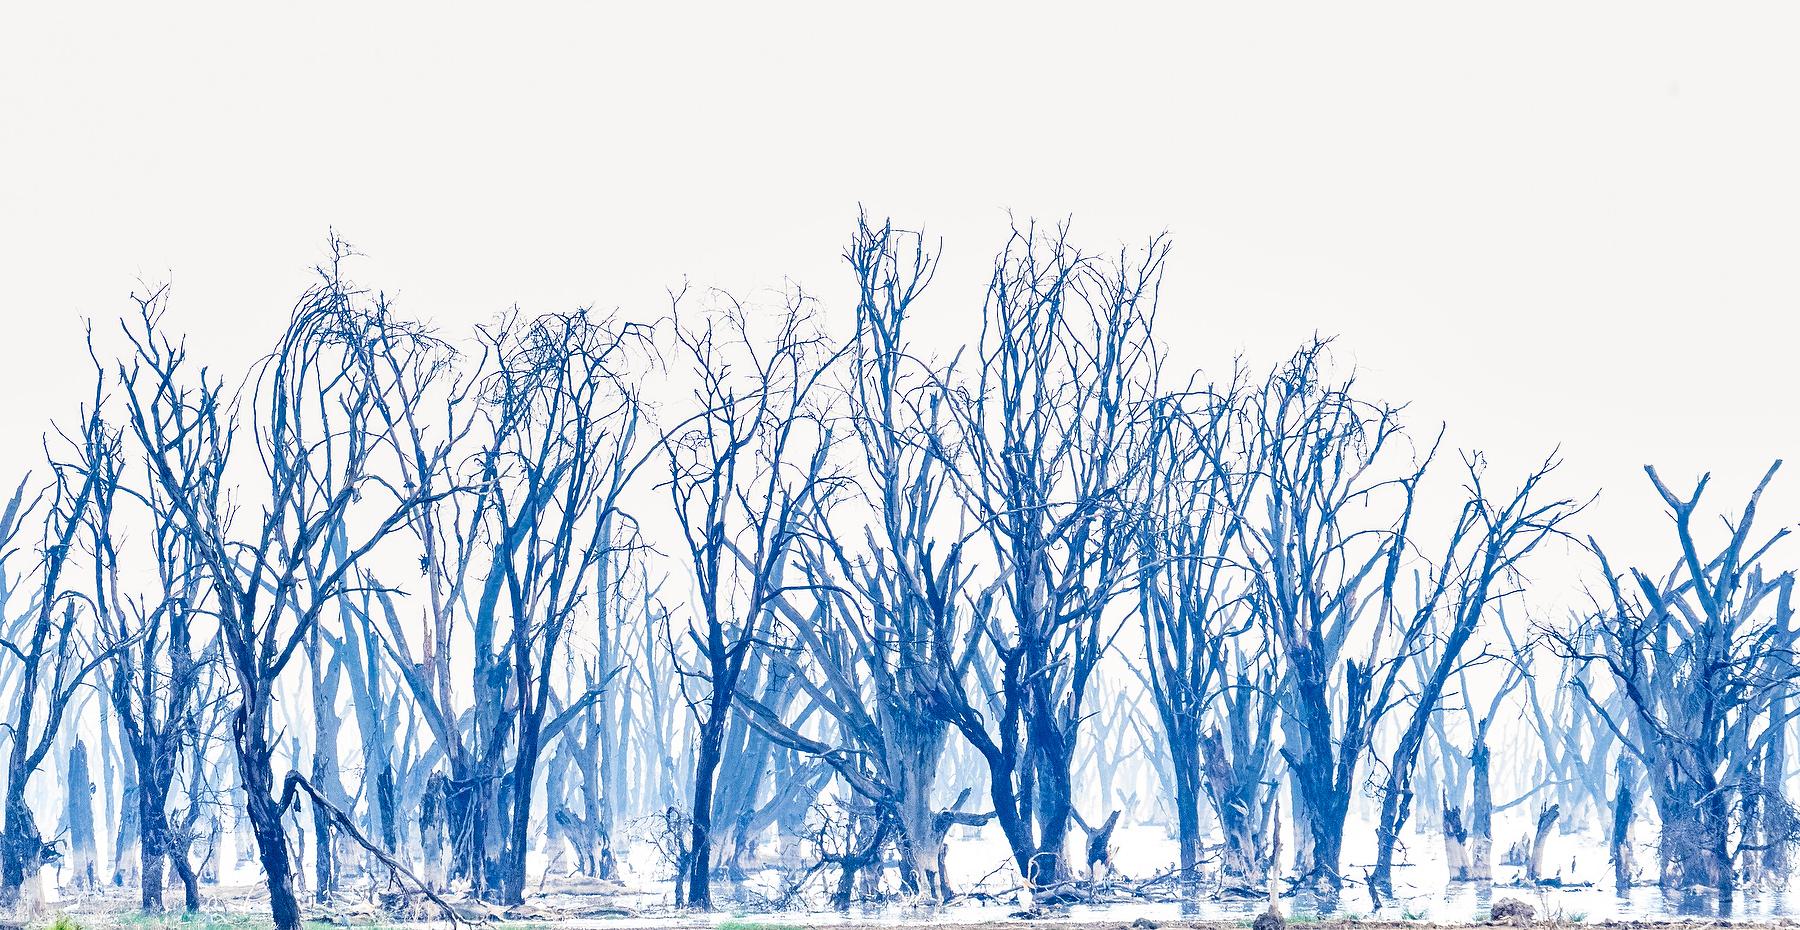 Aditya Dicky Singh Color Photograph - Landscape Large Photograph Lake Nukuru Nature Trees Wildlife Africa Blue White